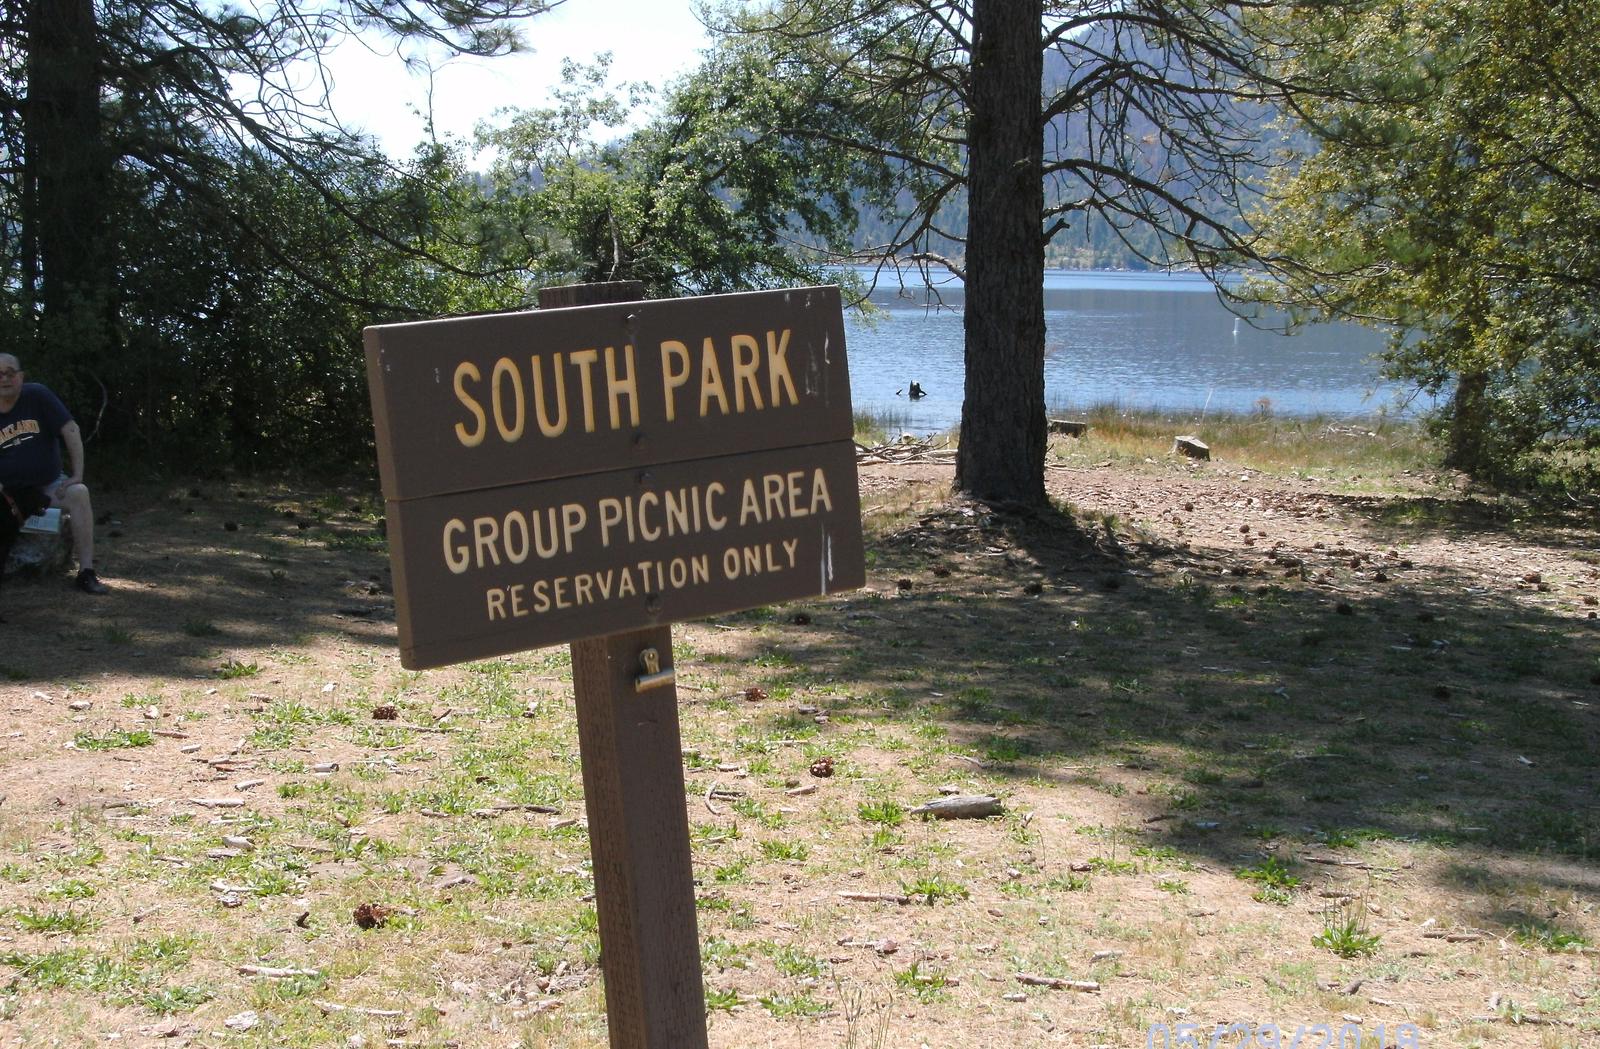 South Park Group Picnic Area